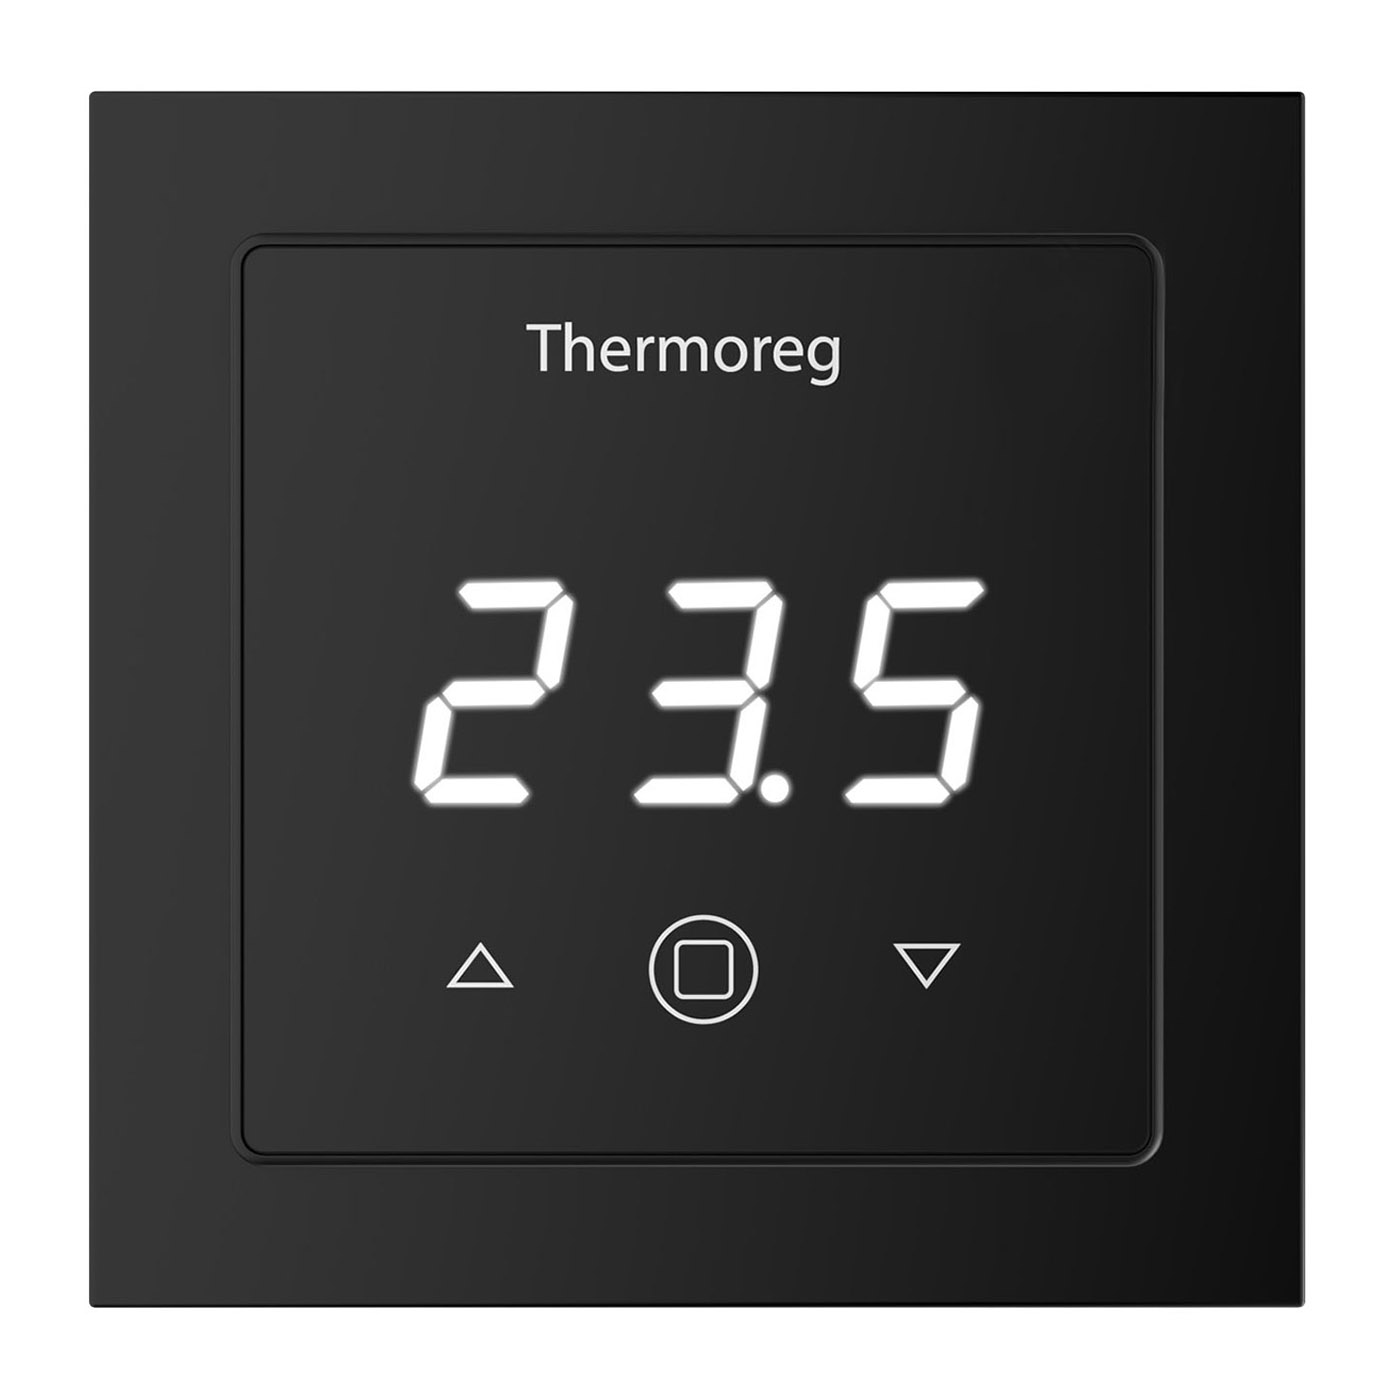 Терморегулятор Thermoreg TI-300 Black